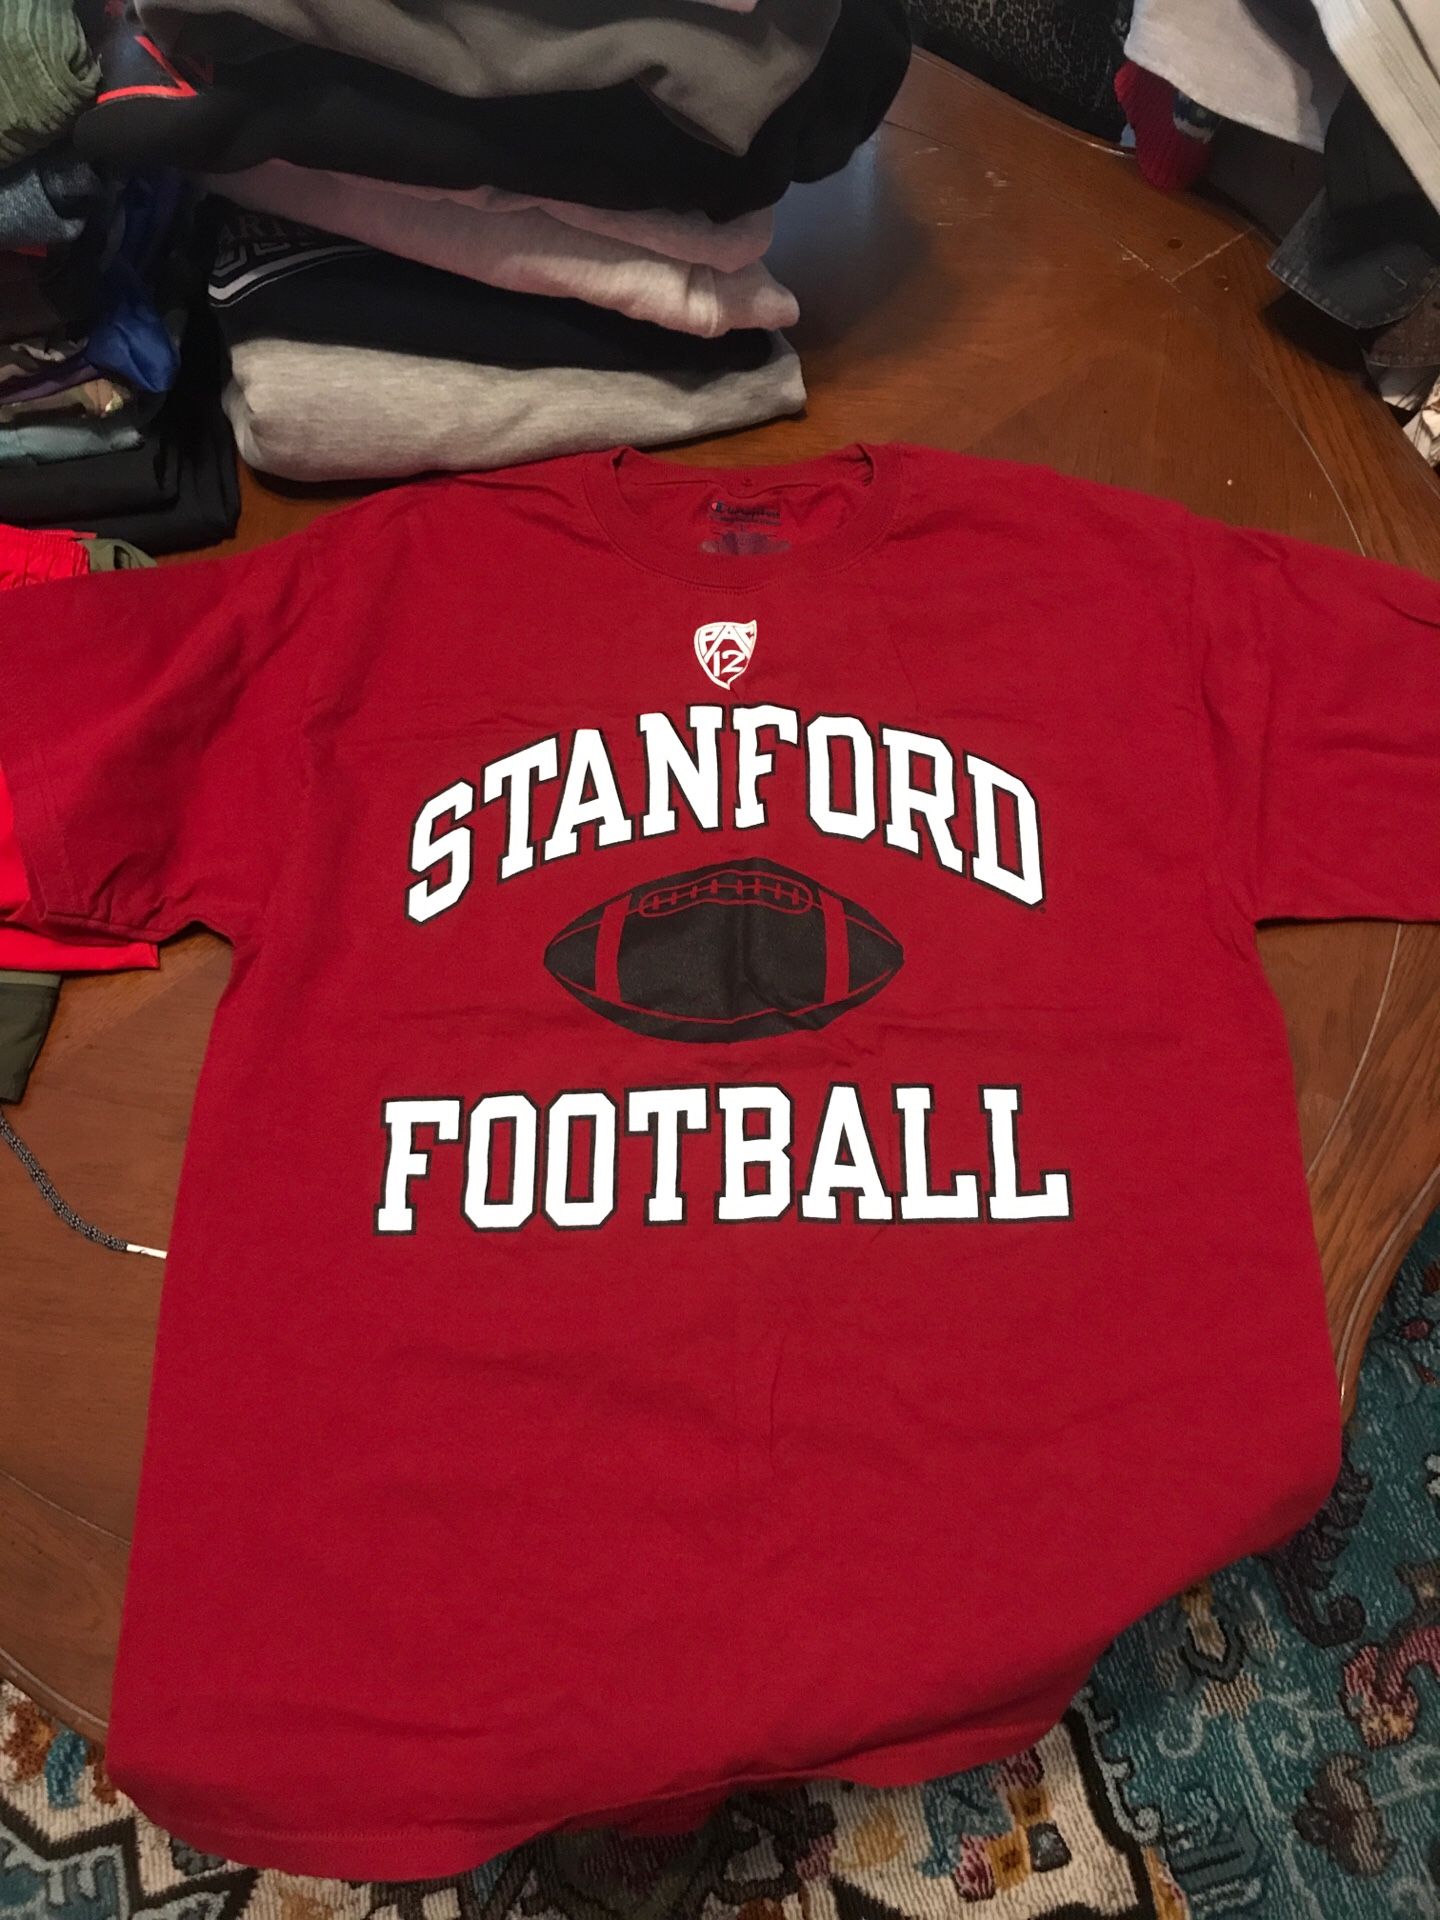 Stanford football tee shirt